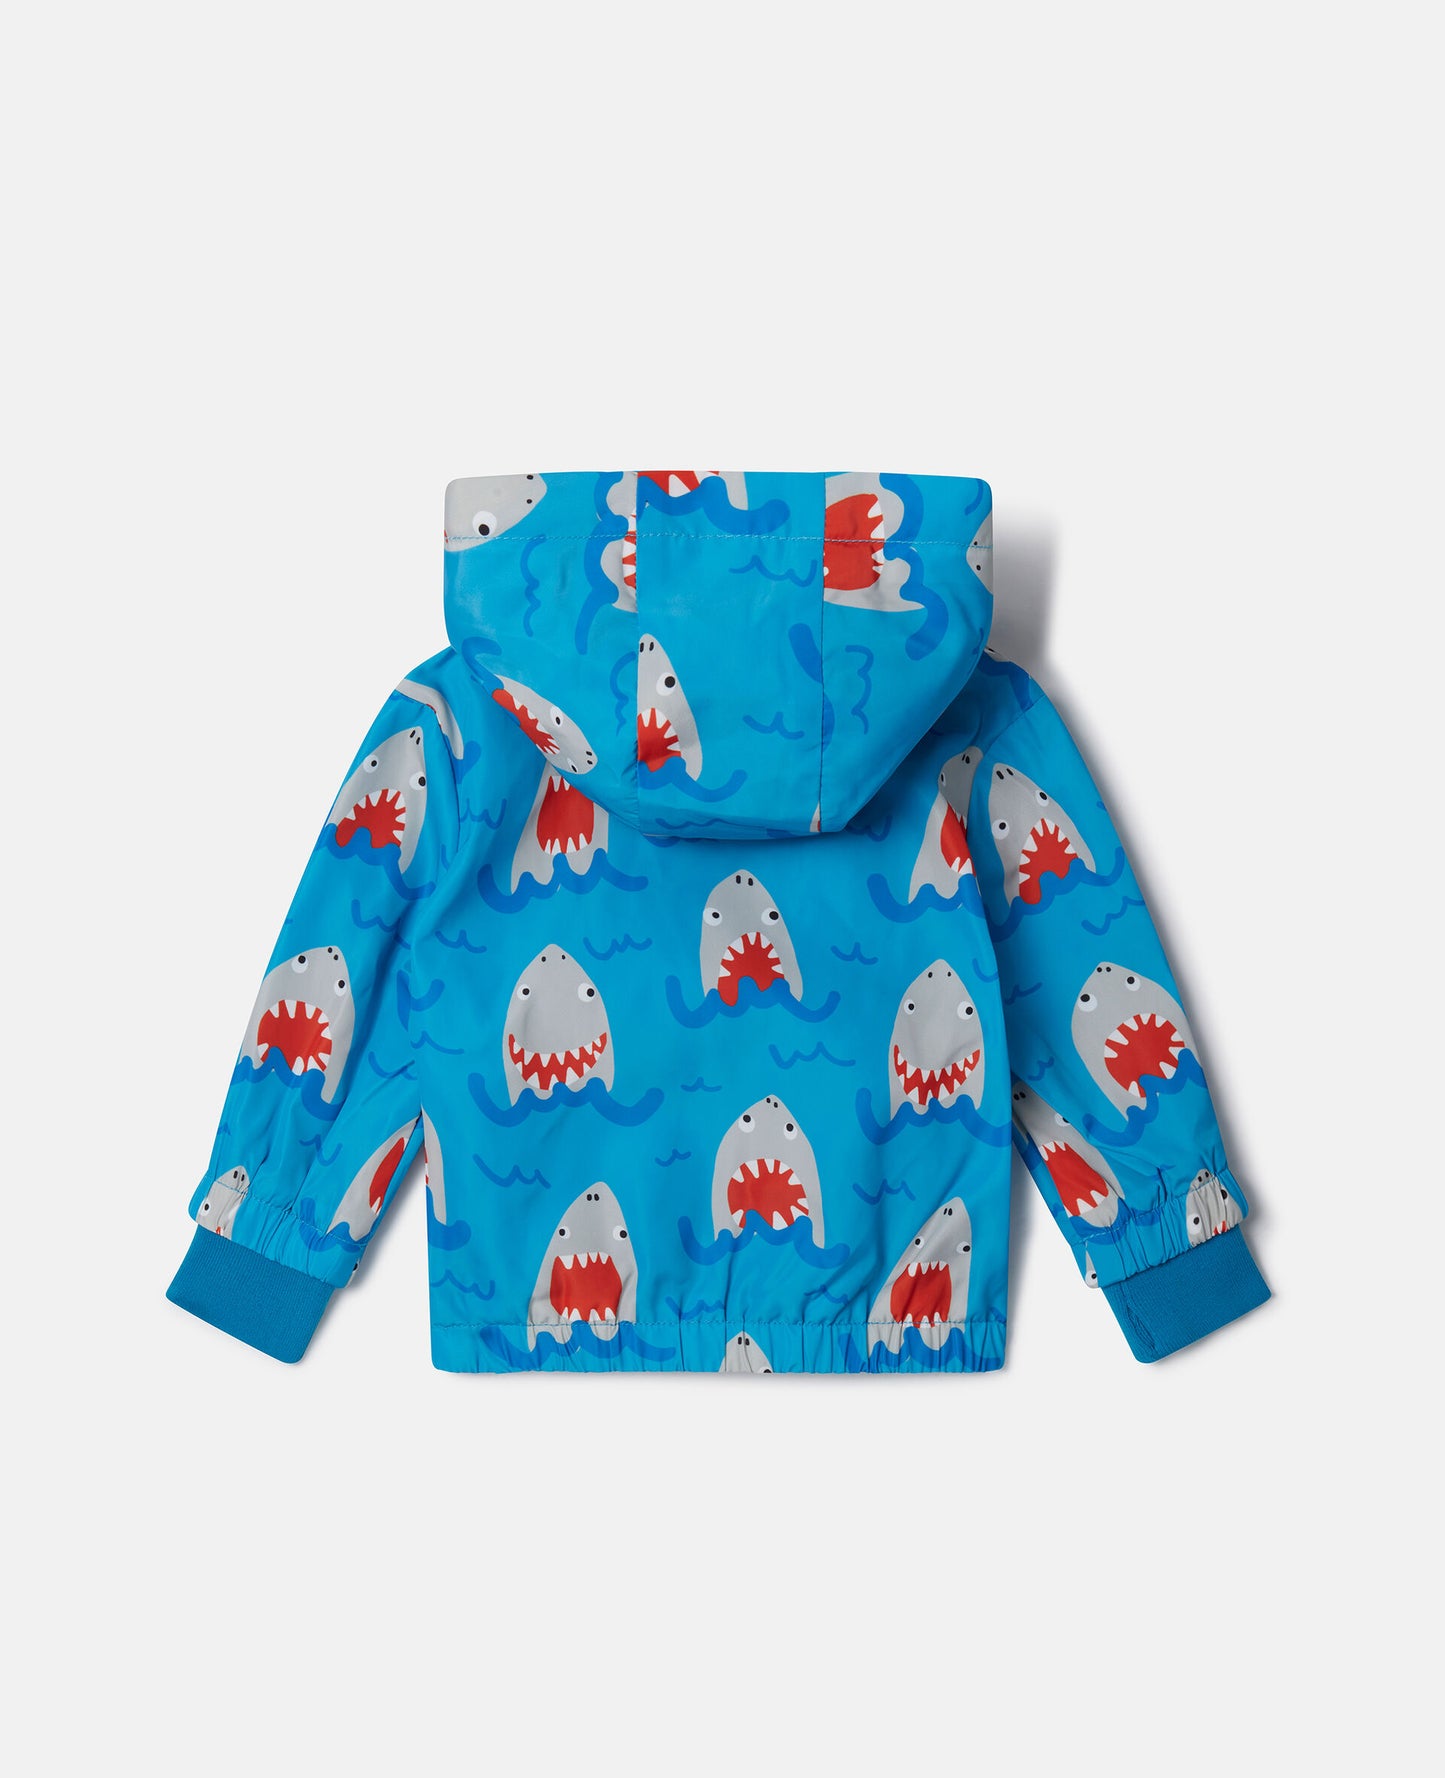 Shark Print Hooded Jacket